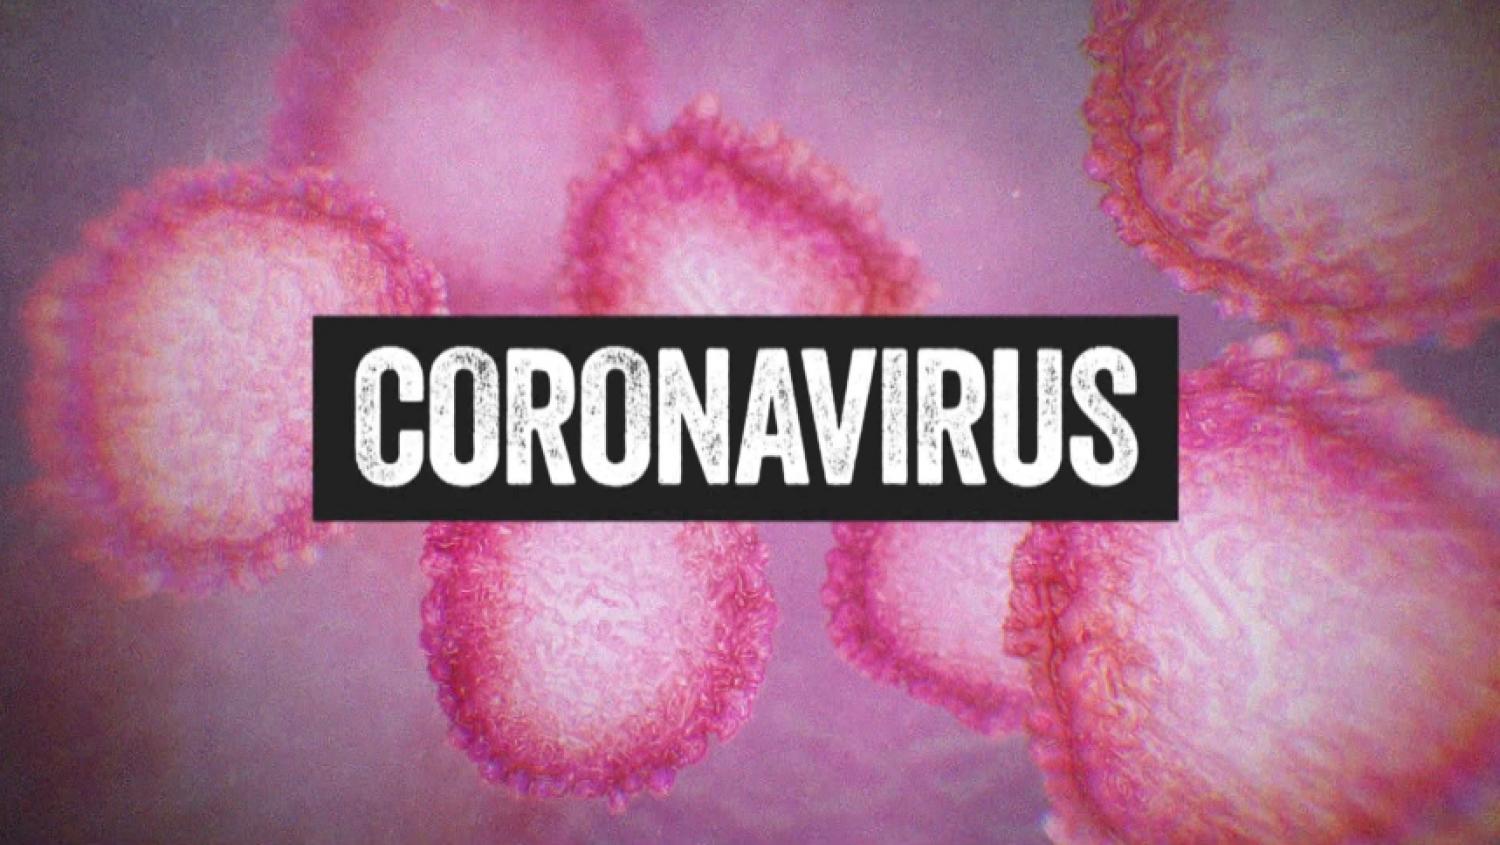 Coronavirus: Agric Quarantine Service issues red alert